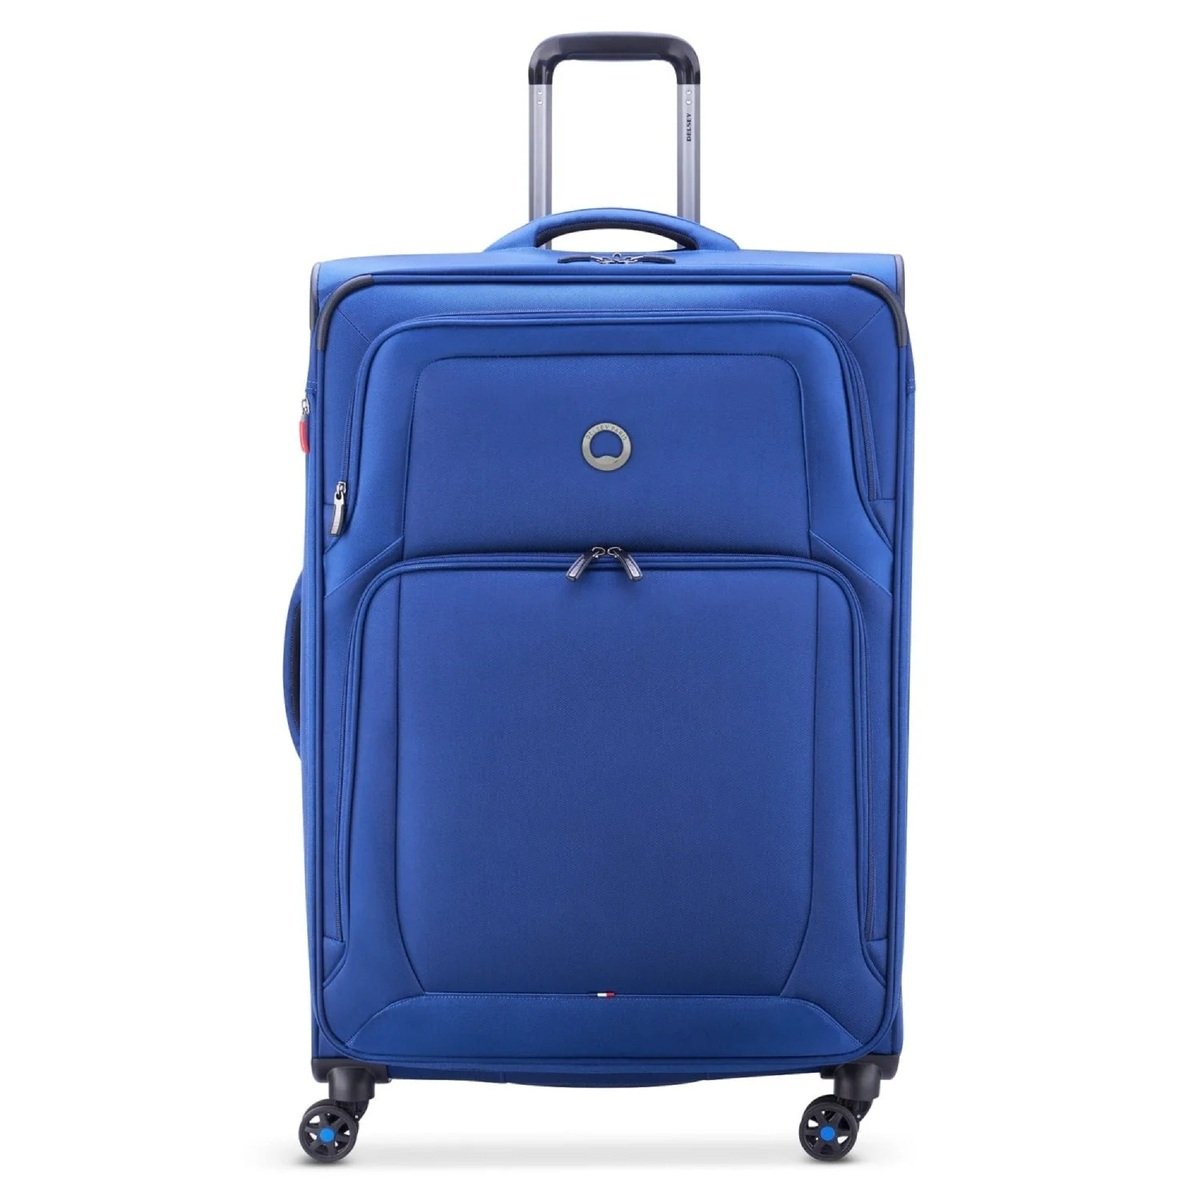 Delsey Optimax 4 Wheel Soft Trolley, 80 cm, Blue